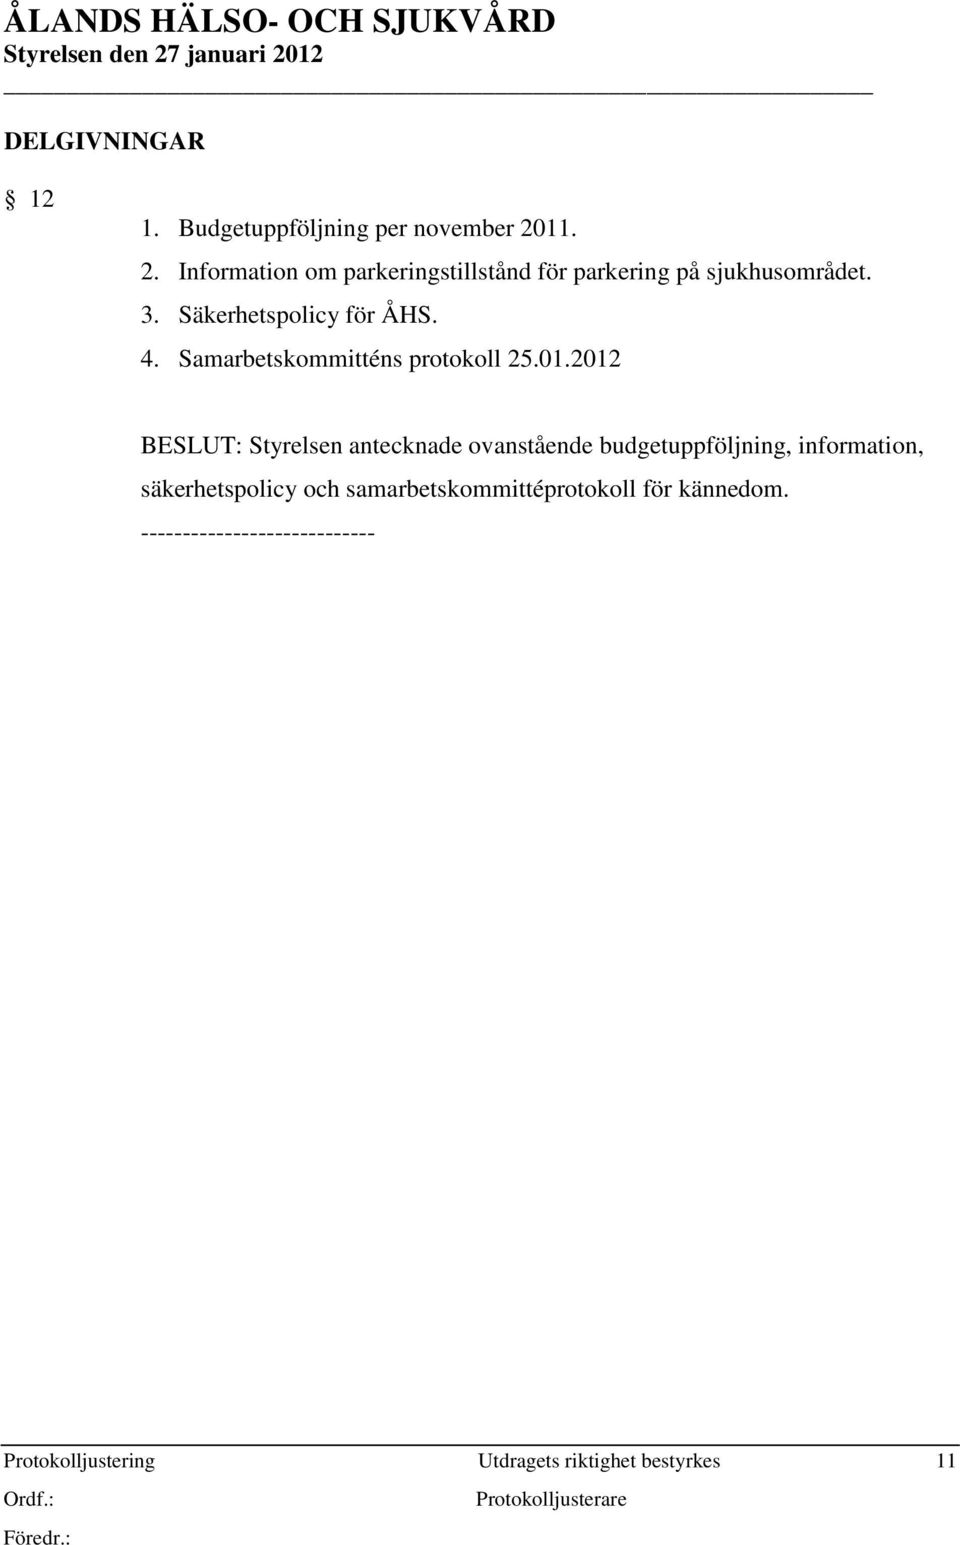 4. Samarbetskommitténs protokoll 25.01.